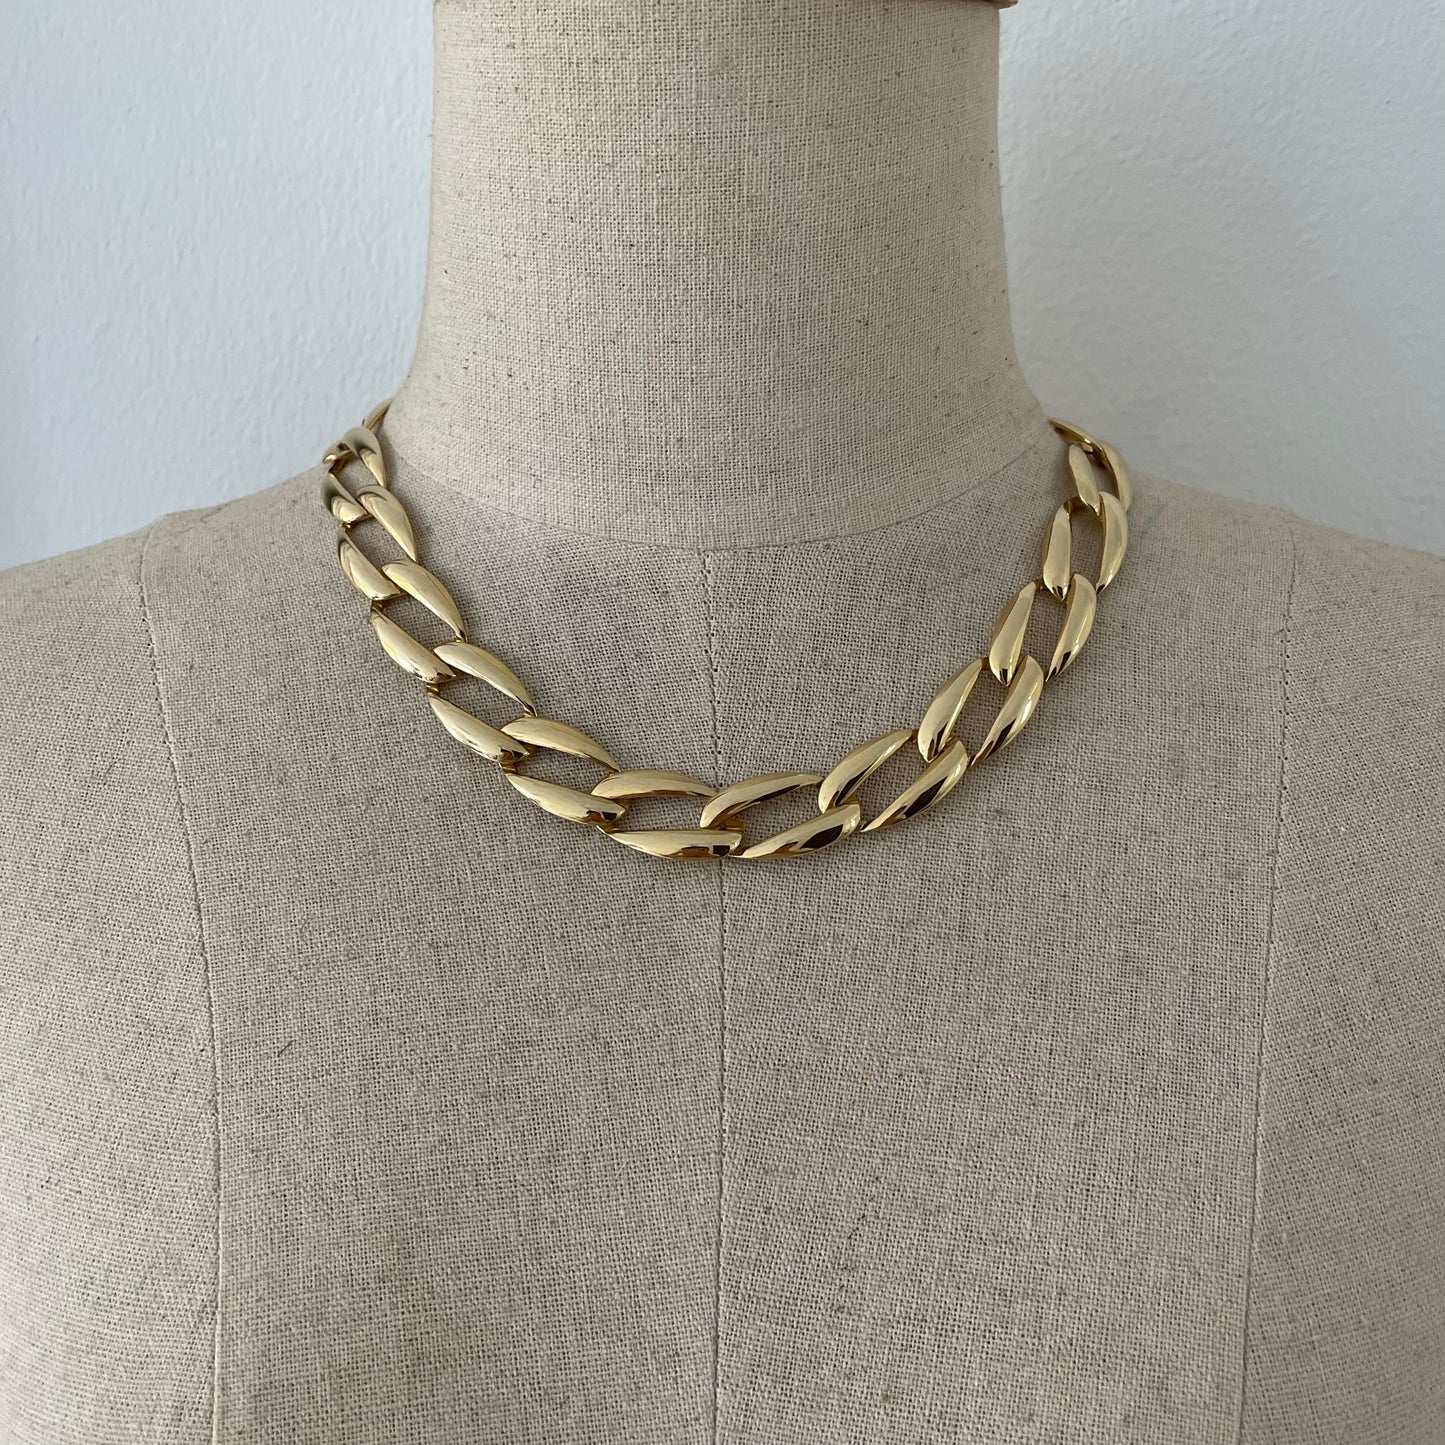 Vintage 1980s Classic Chain Link Necklace